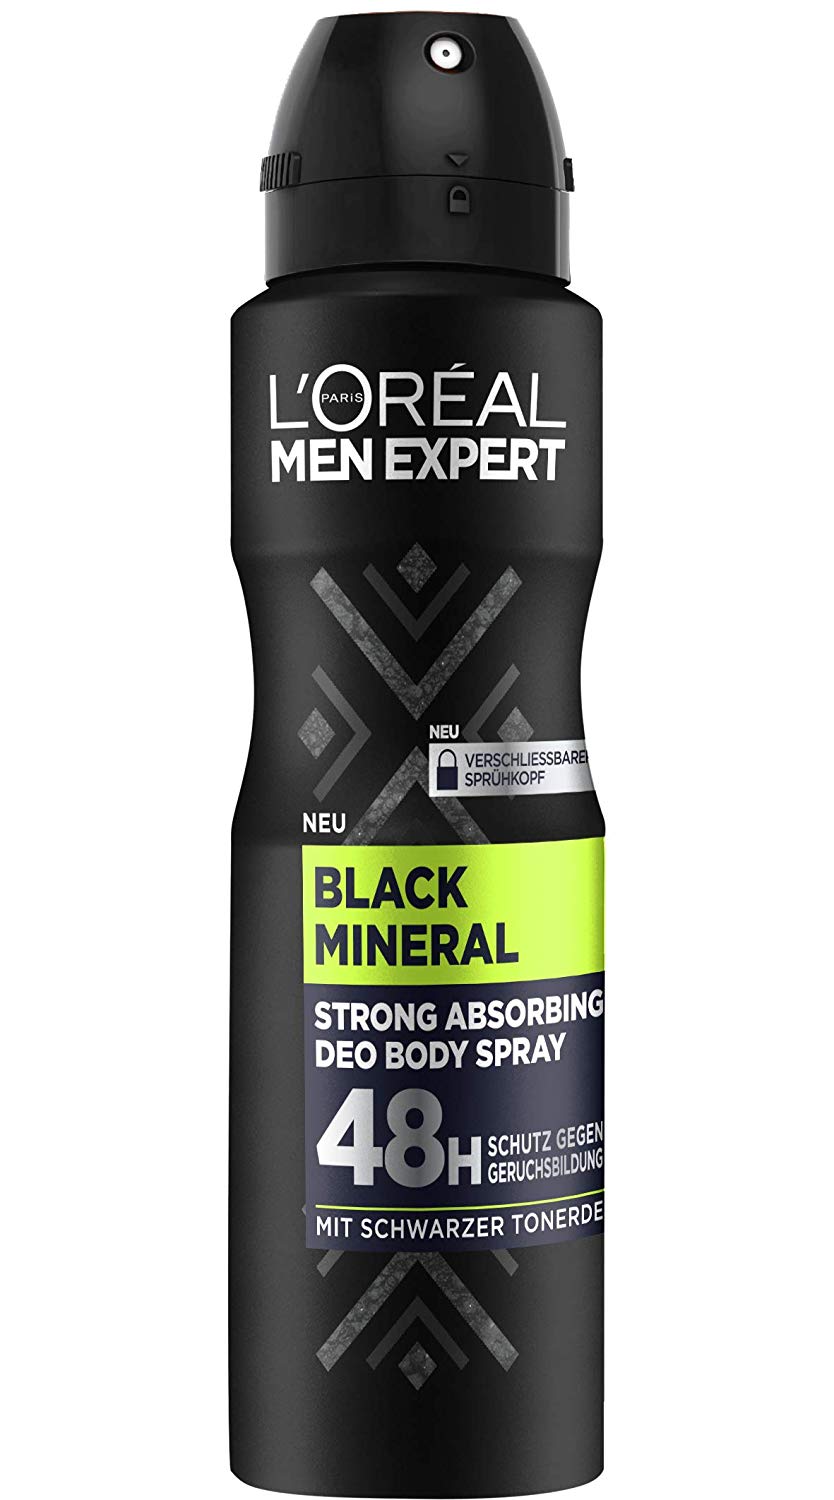 Pack 6 unidades de desodorante L'Oréal Men Expert Black Mineral solo 9,5€